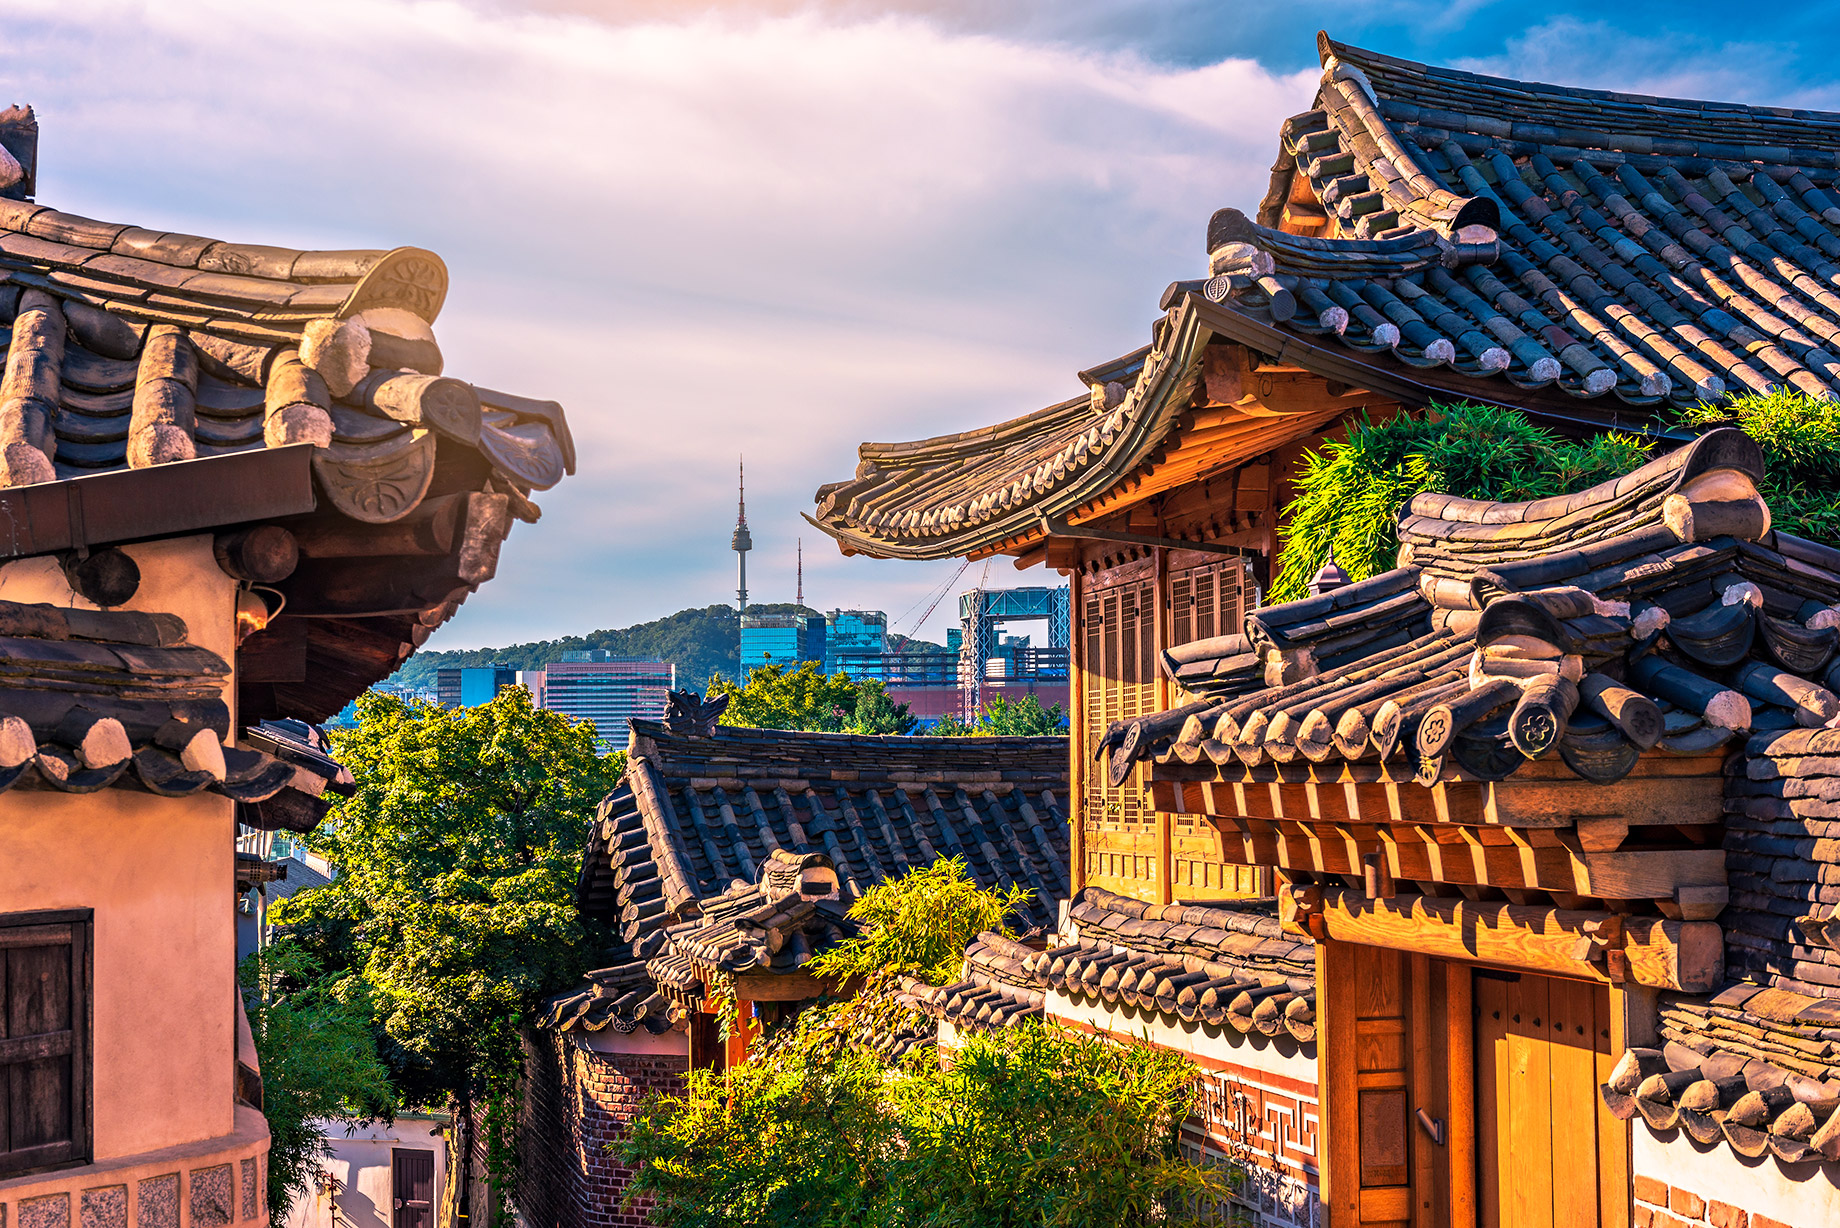 Pagoda Roof Design – Bukchon Hanok Village – Seoul, South Korea